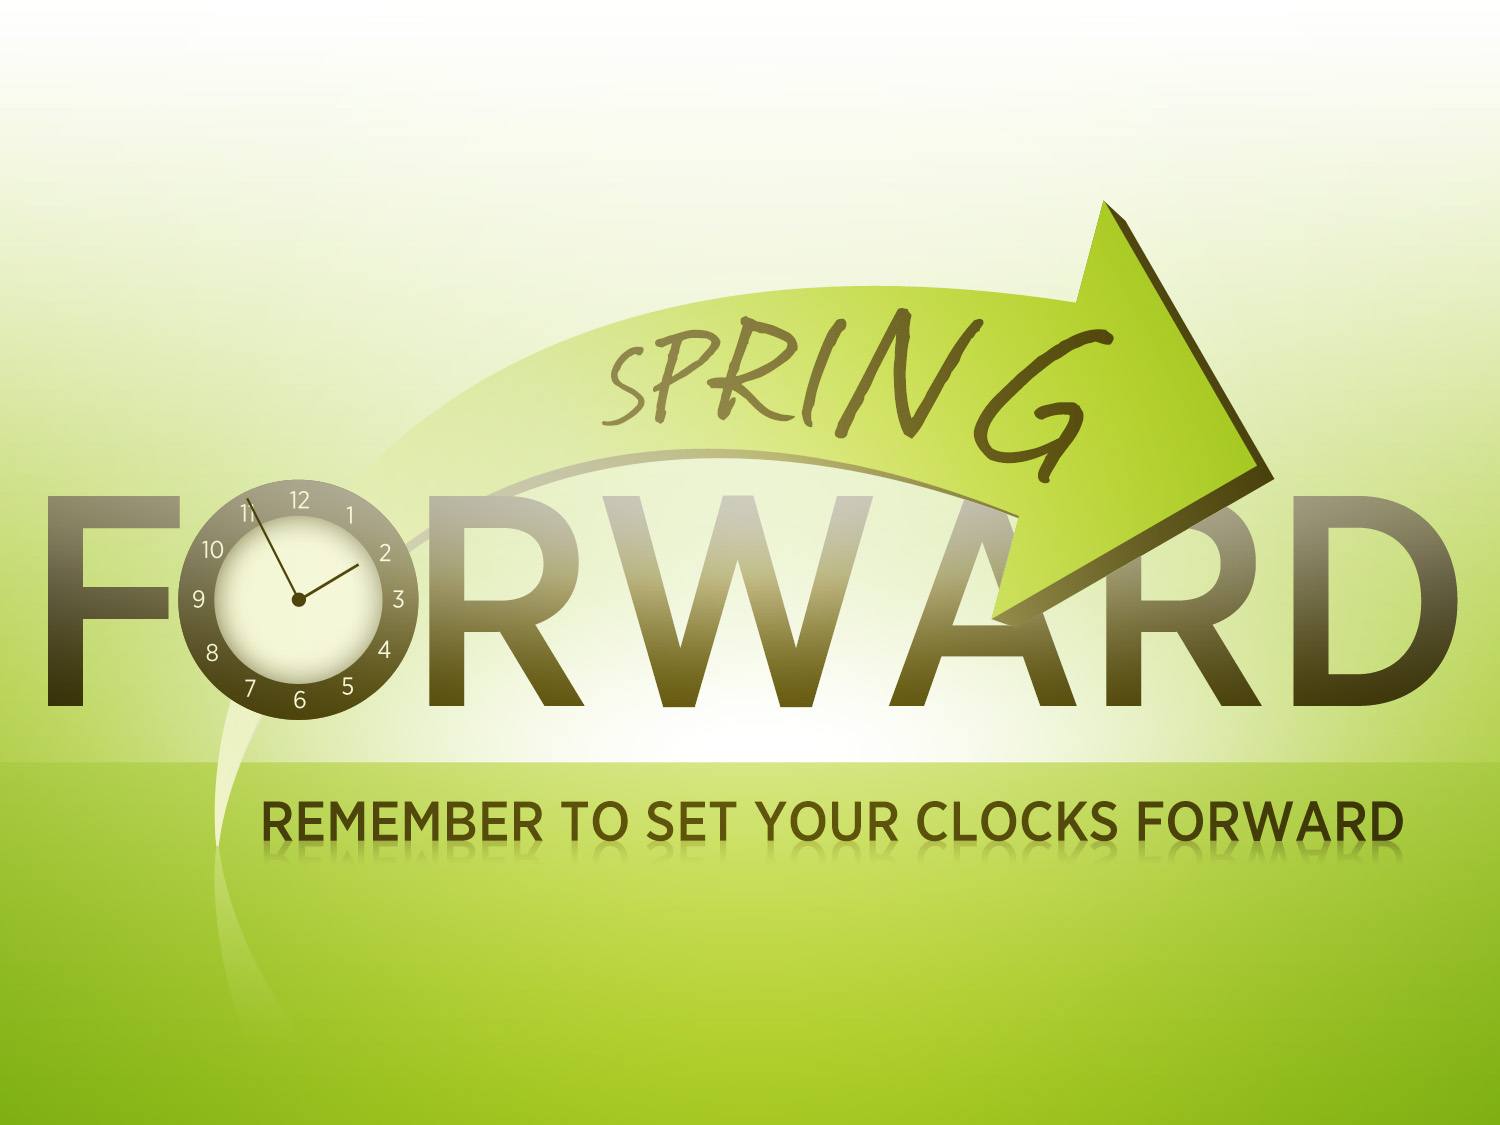 daylight savings spring forward clipart